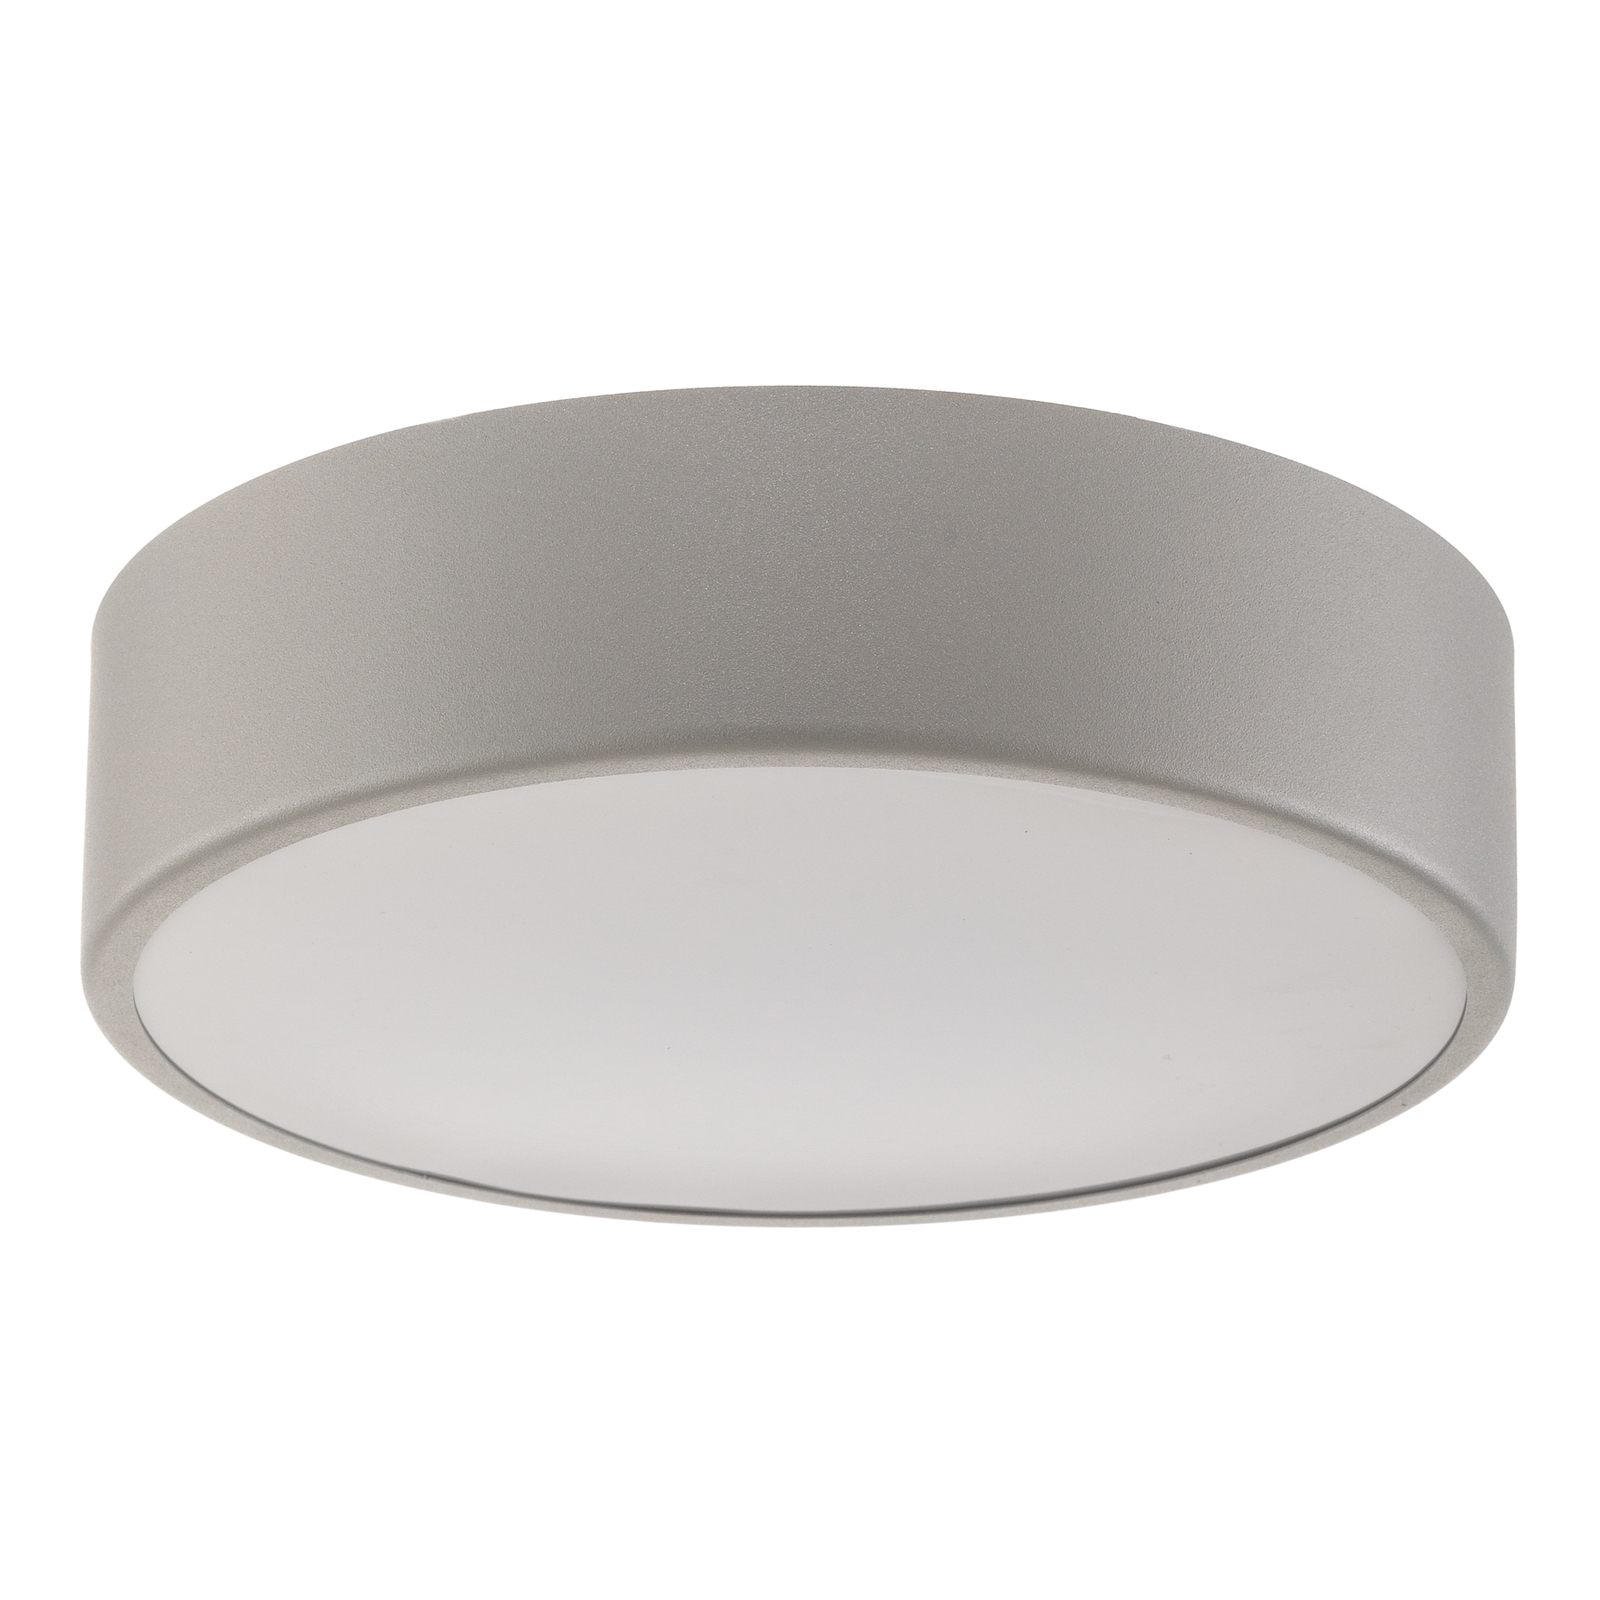 Cleo 300 ceiling light, IP54, Ø 30 cm grey